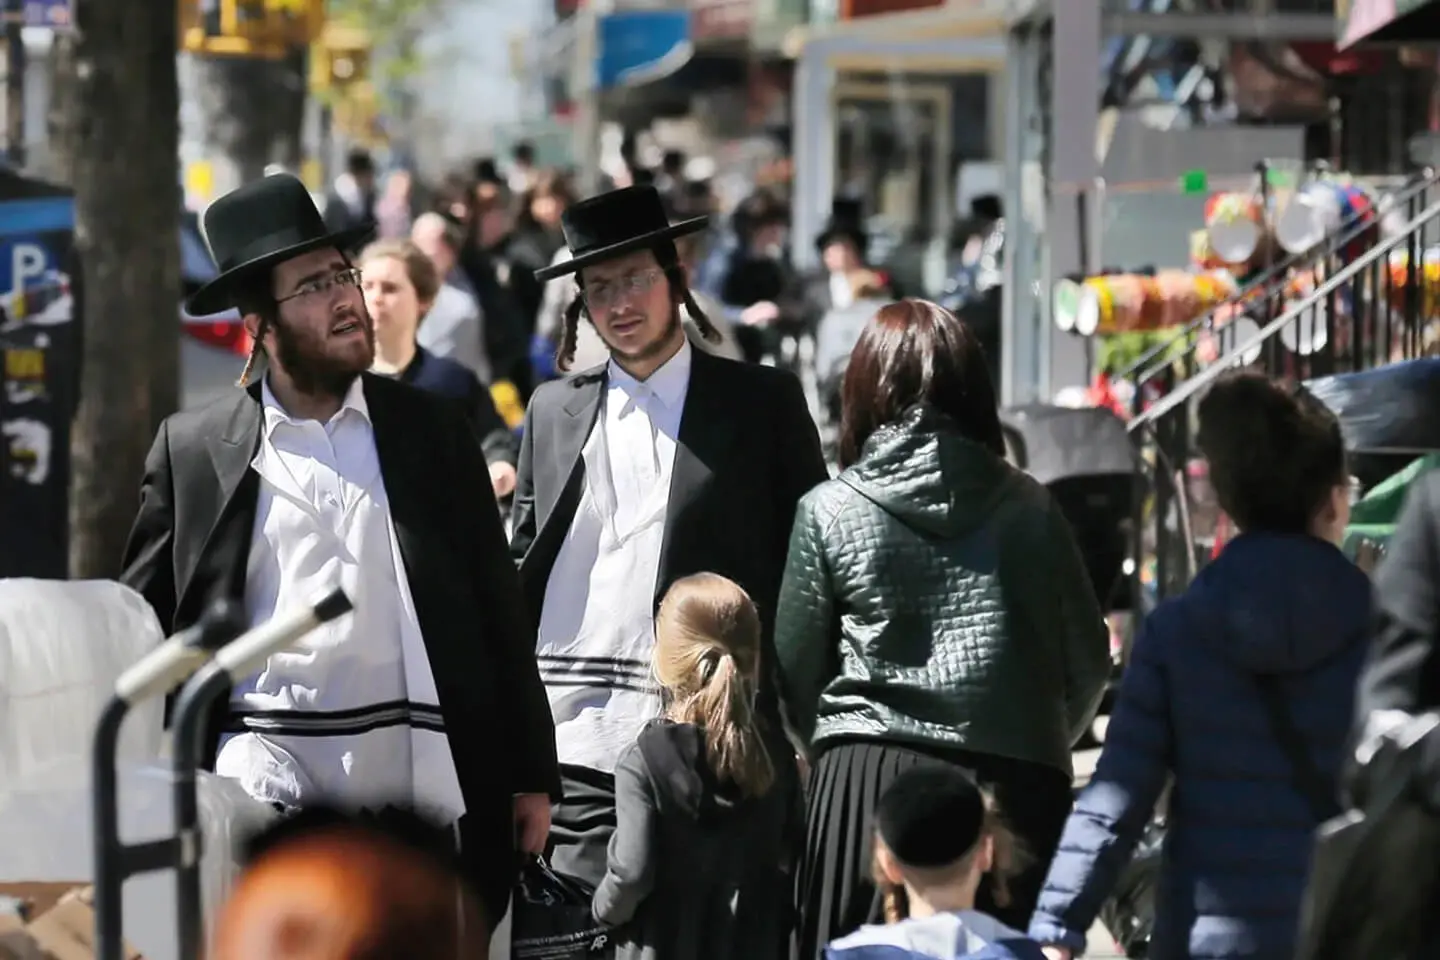 Two men in traditional Jewish attire talking on a bustling Manhattan city street.